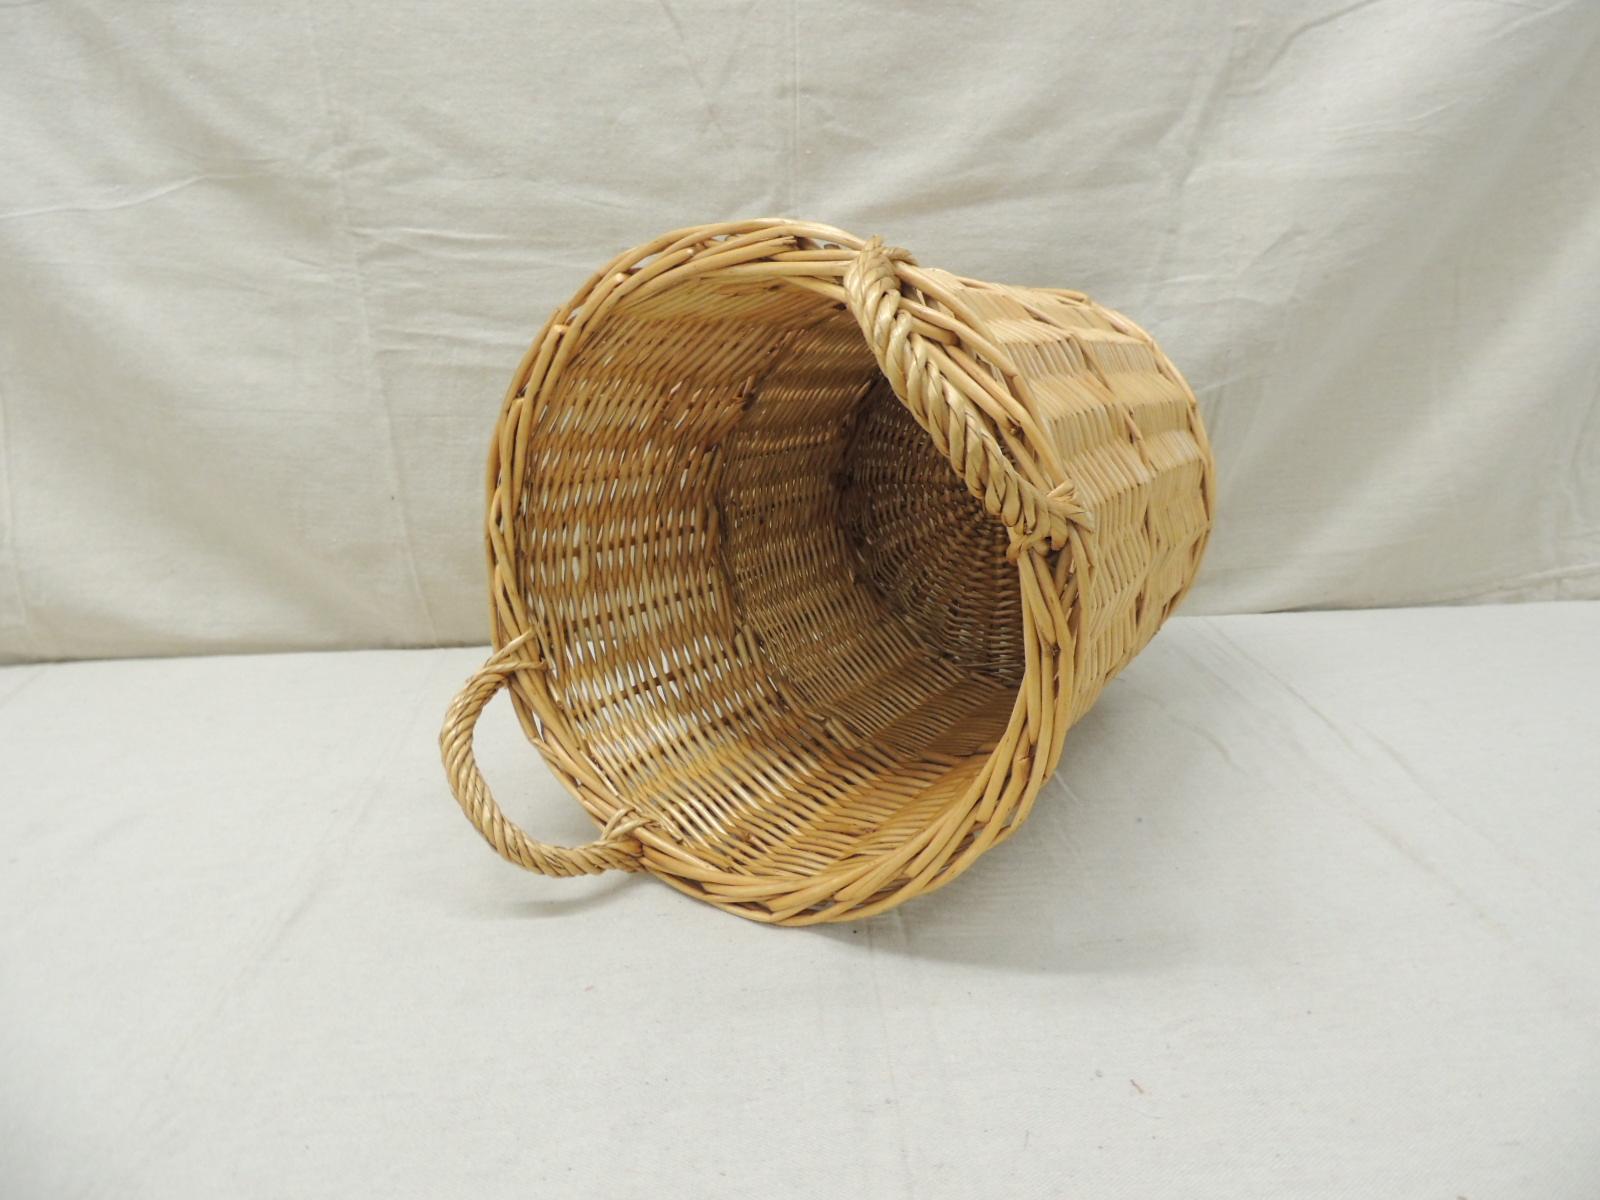 Vietnamese Round Woven Basket or Wastebasket with Handles